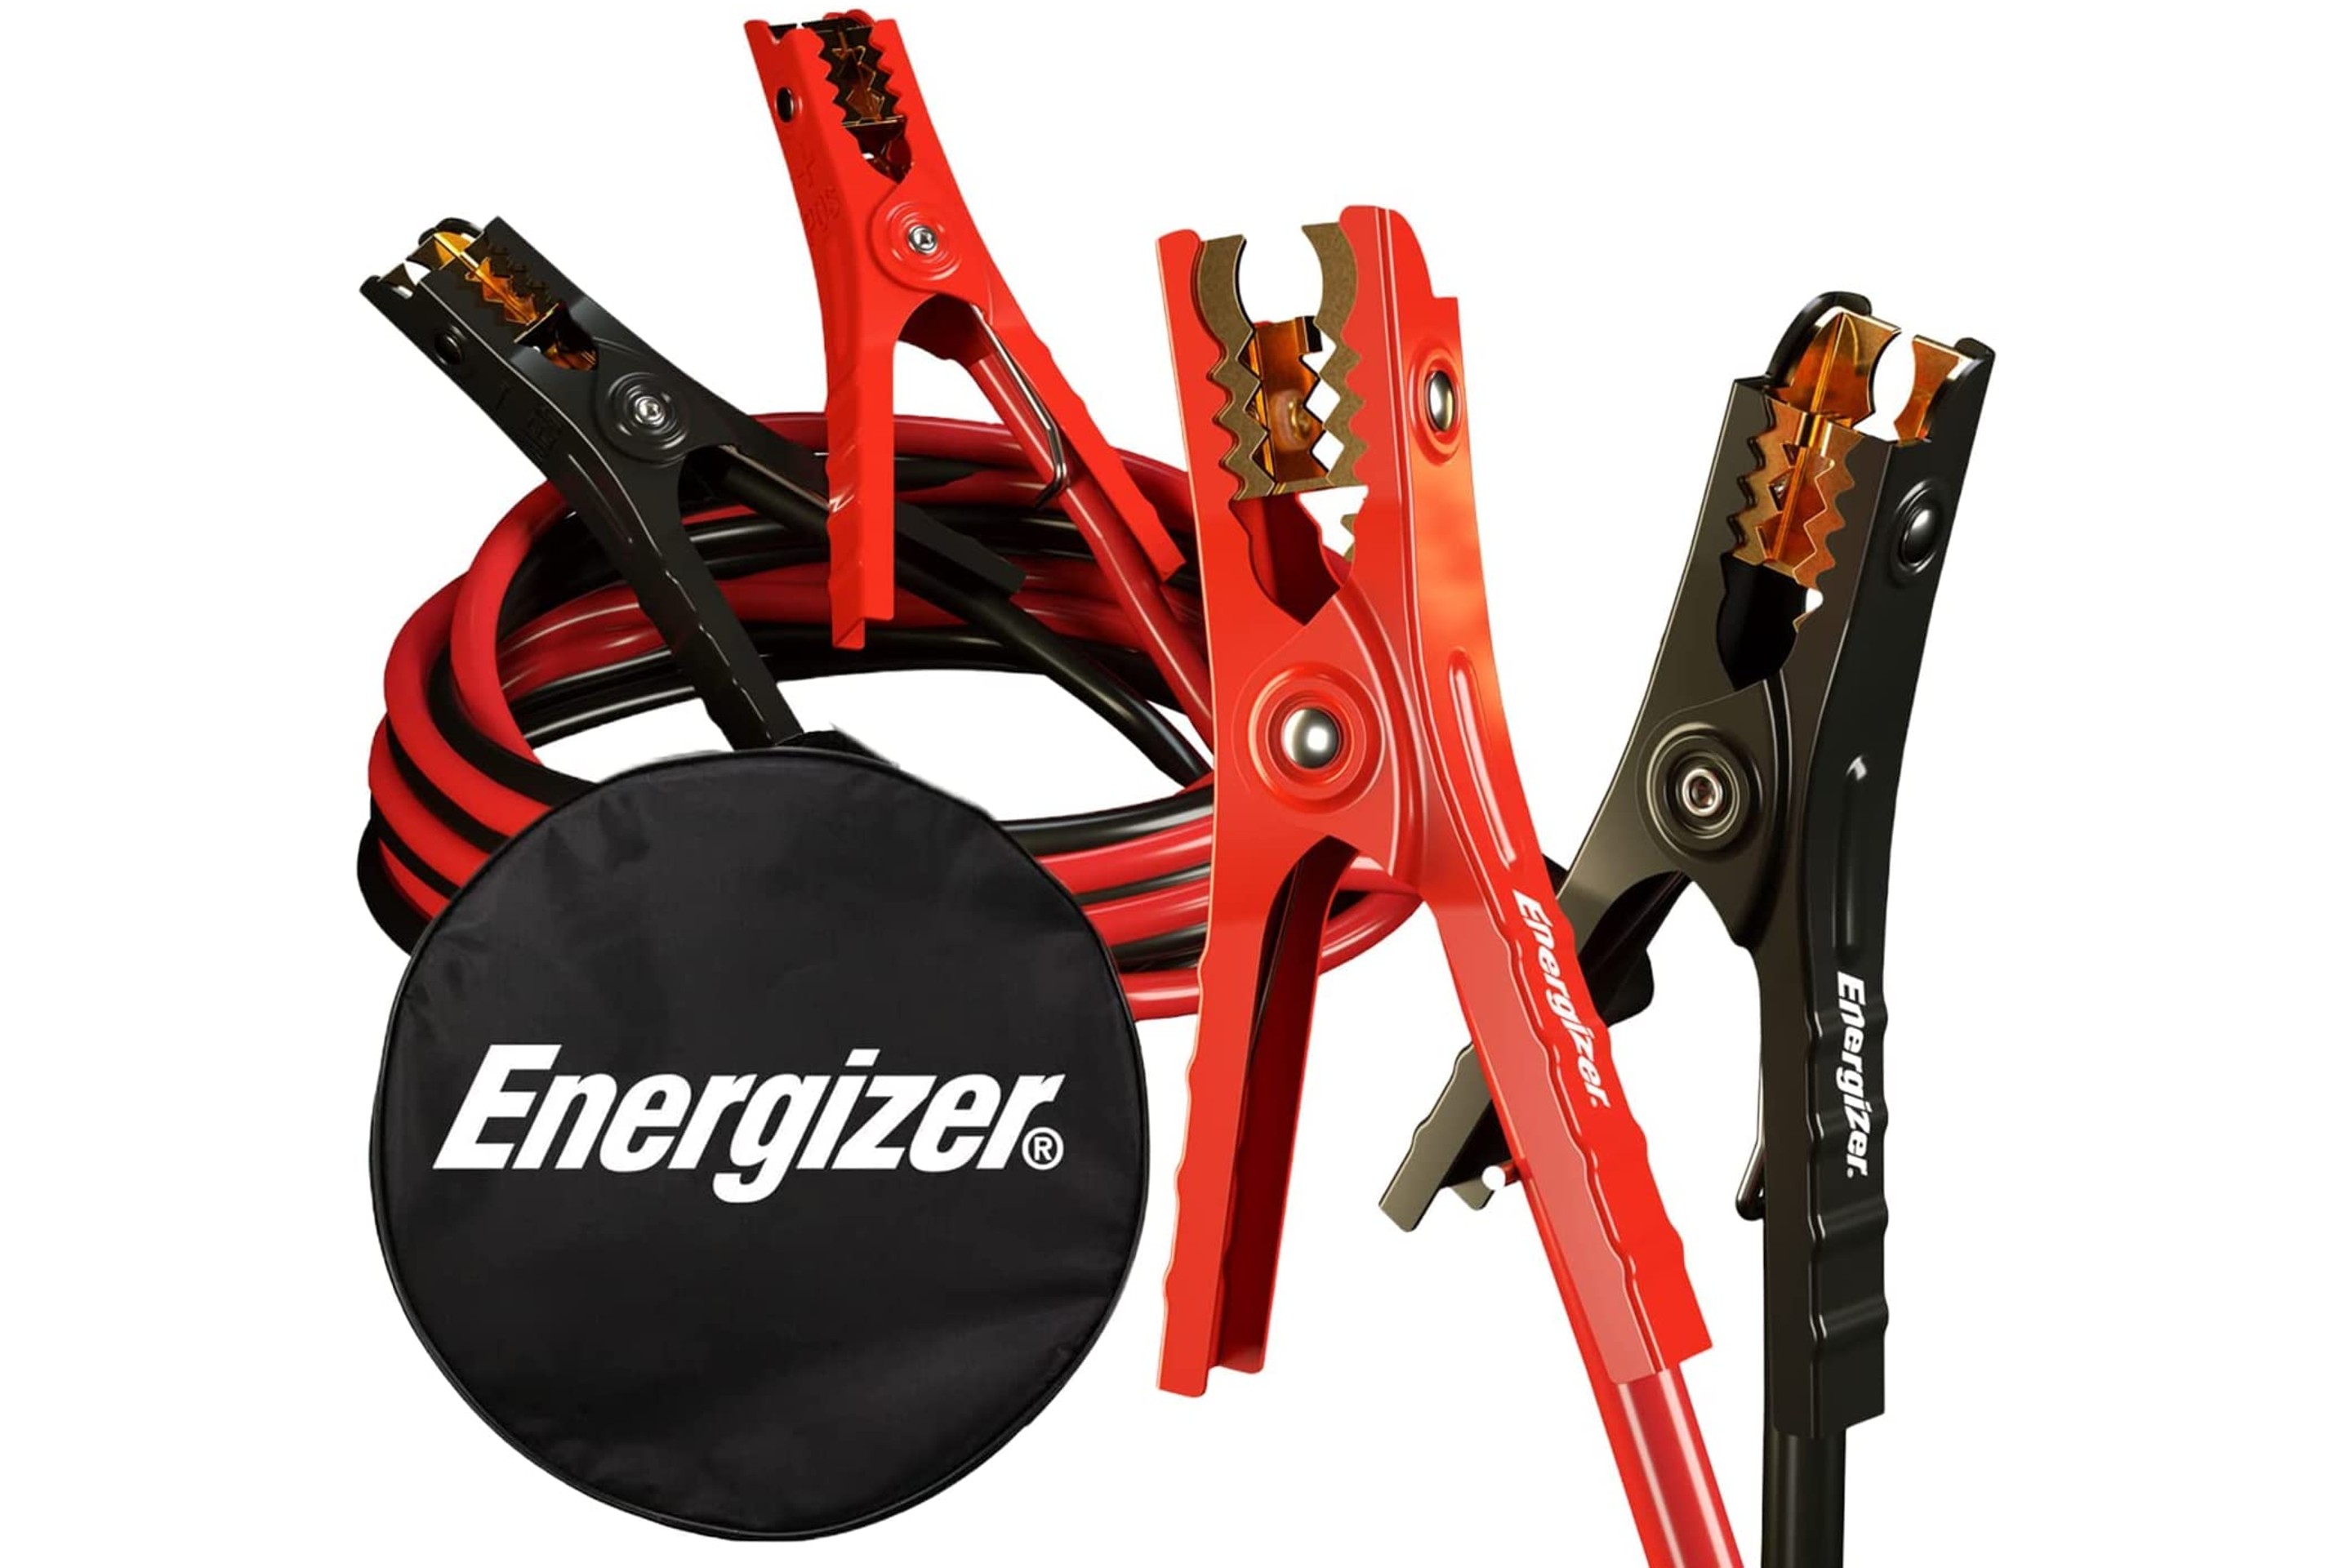 Energizer Jumper Cables for Car Battery